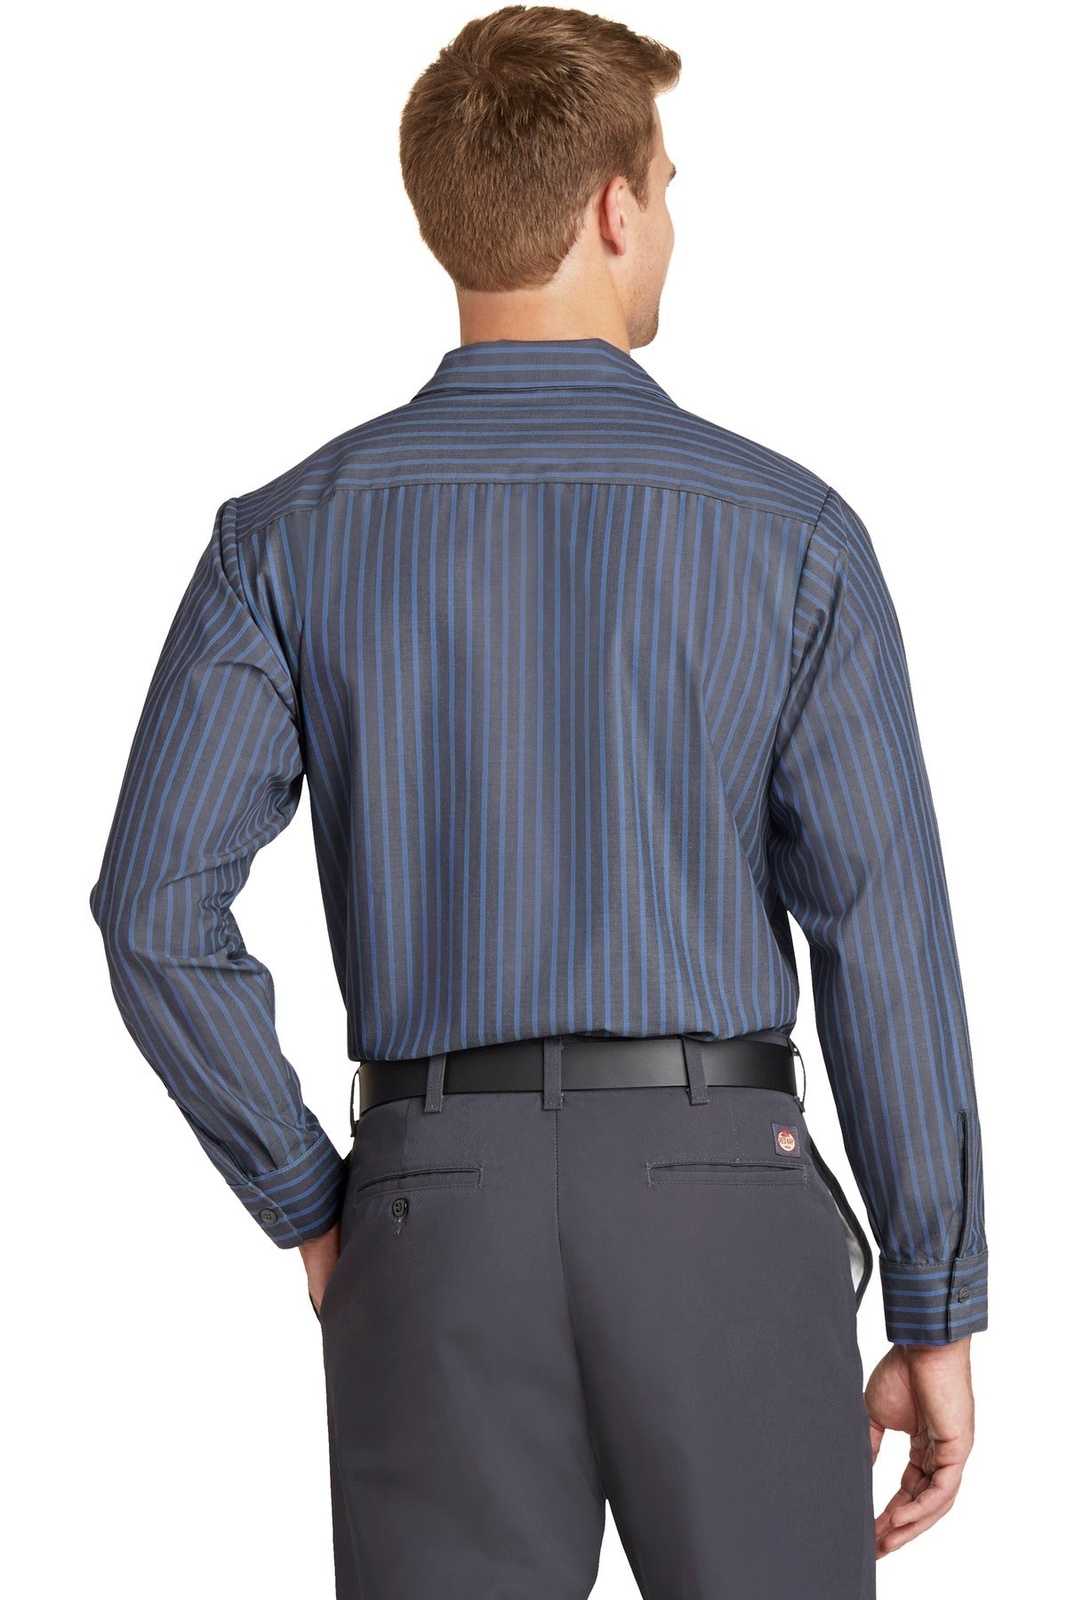 Red Kap CS10 Long Sleeve Striped Industrial Work Shirt - Gray/ Blue - HIT a Double - 2